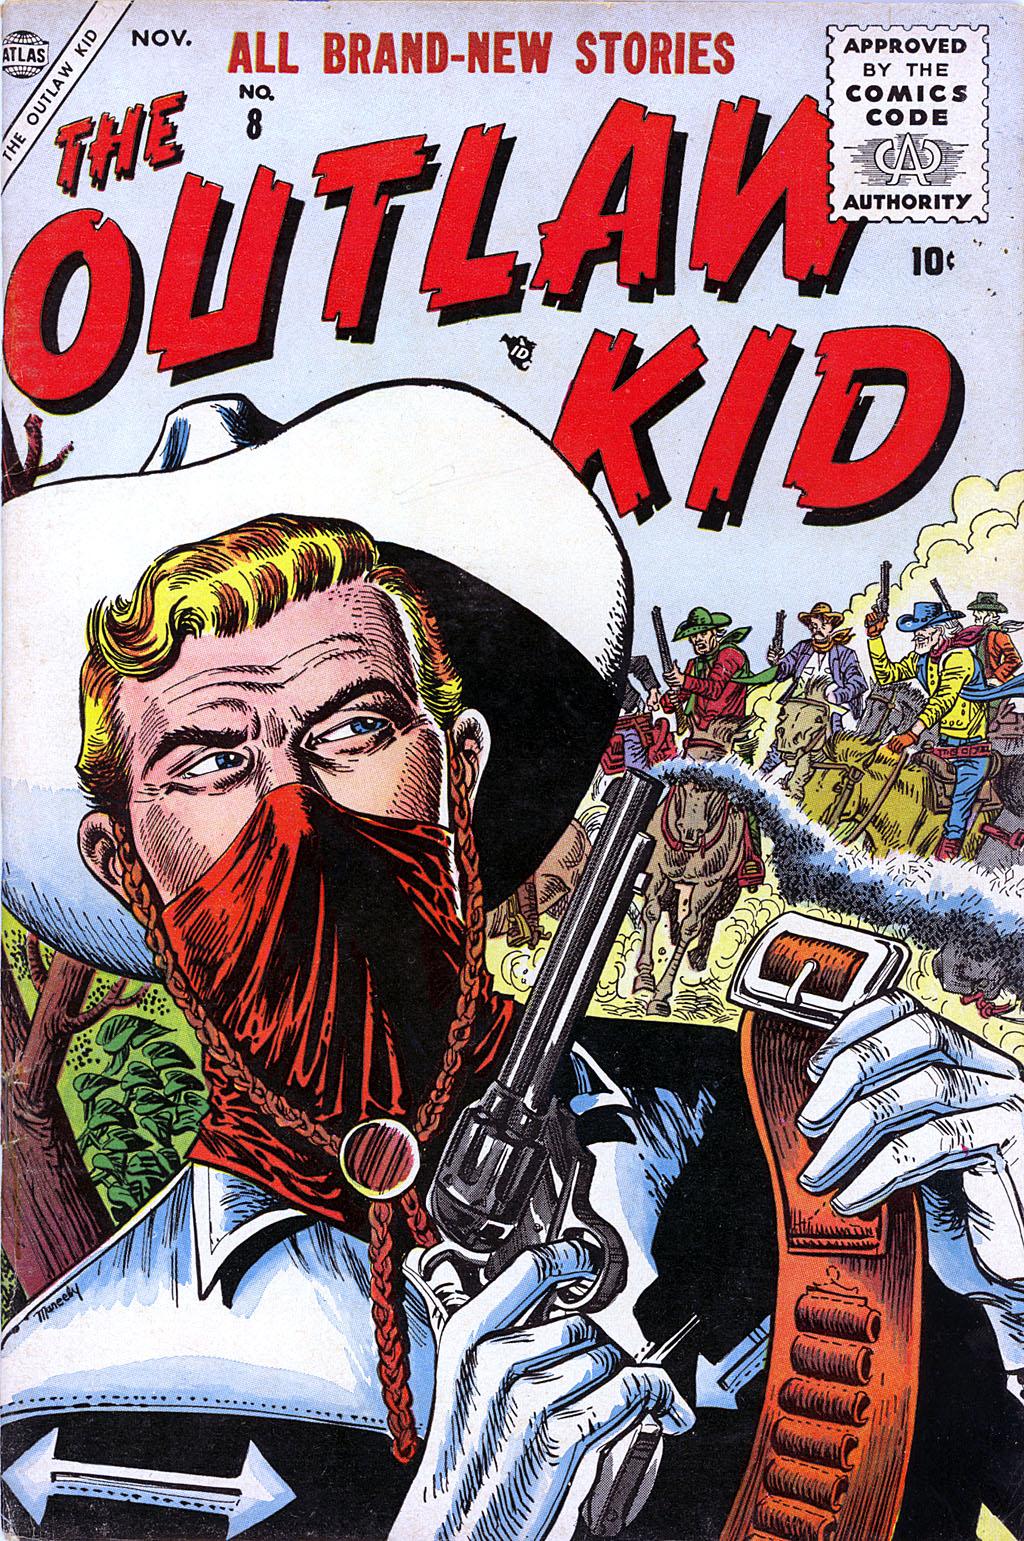 Outlaw Kid Vol. 1 #8